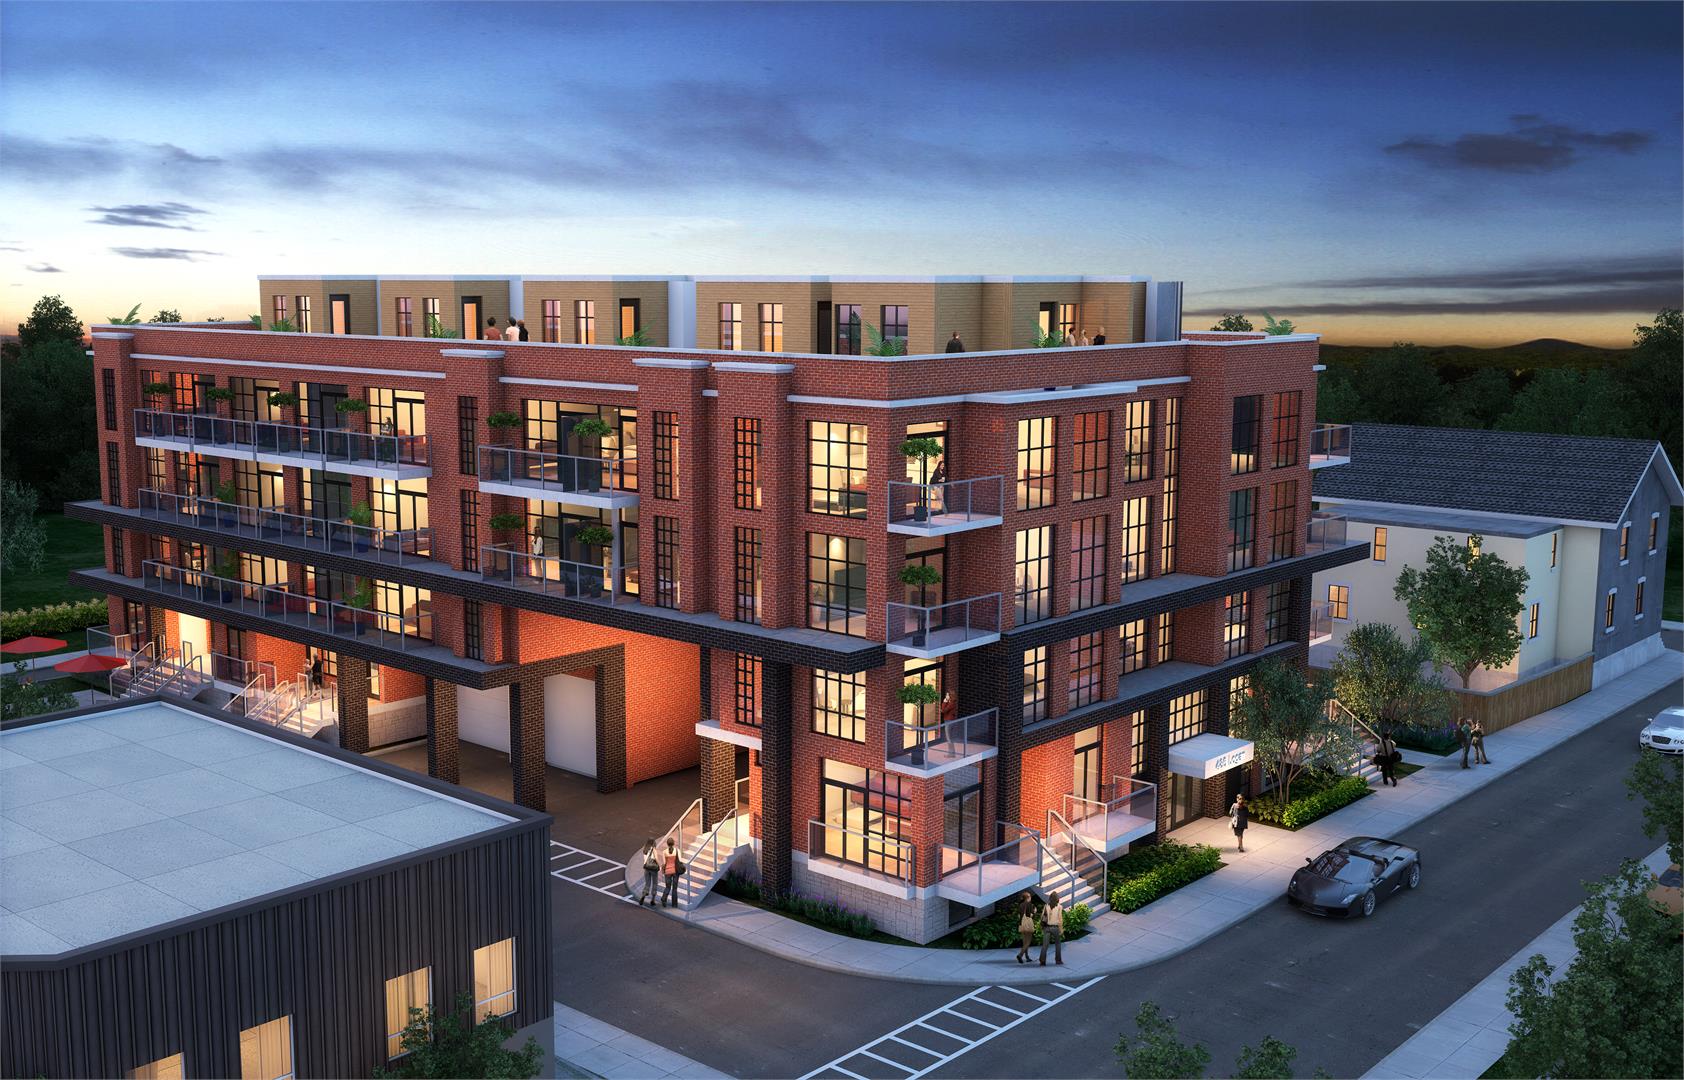 3d image of Elevate at Logan, new condo development on 485 Logan Avenue.